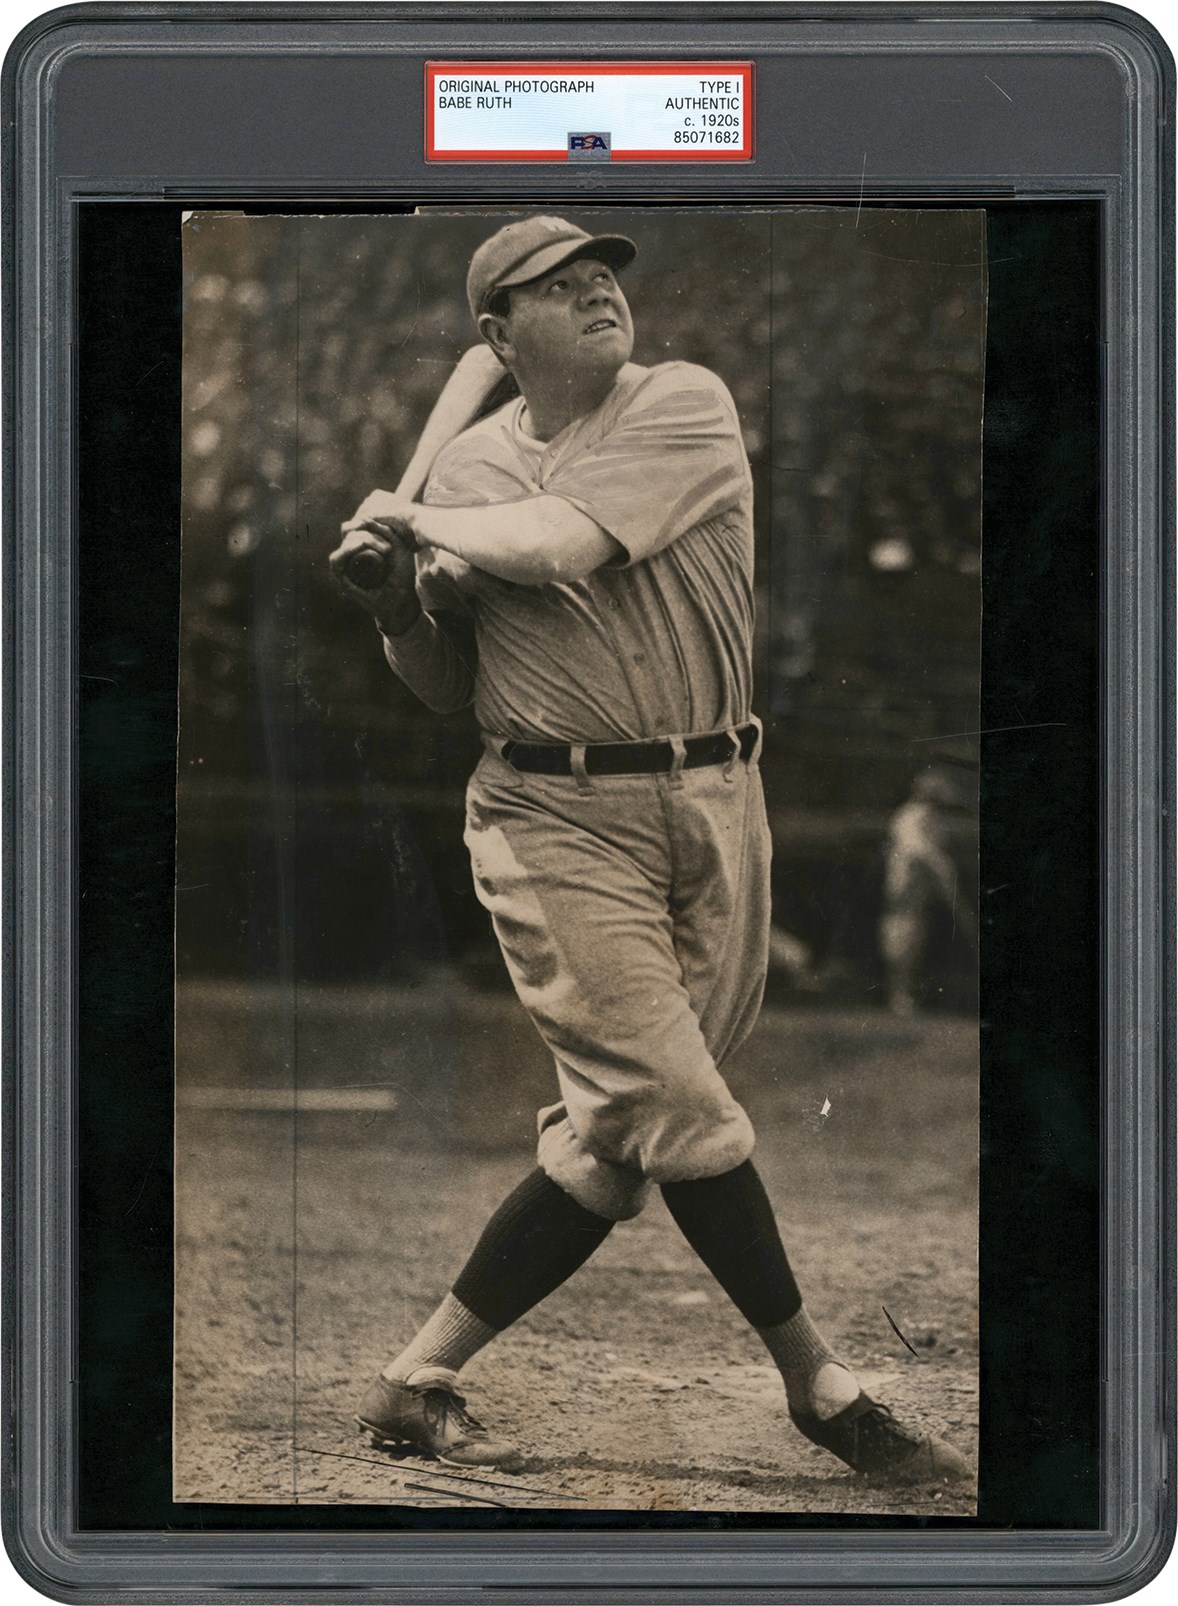 Vintage Sports Photographs - 1928 Babe Ruth Original Photograph (PSA Type I)